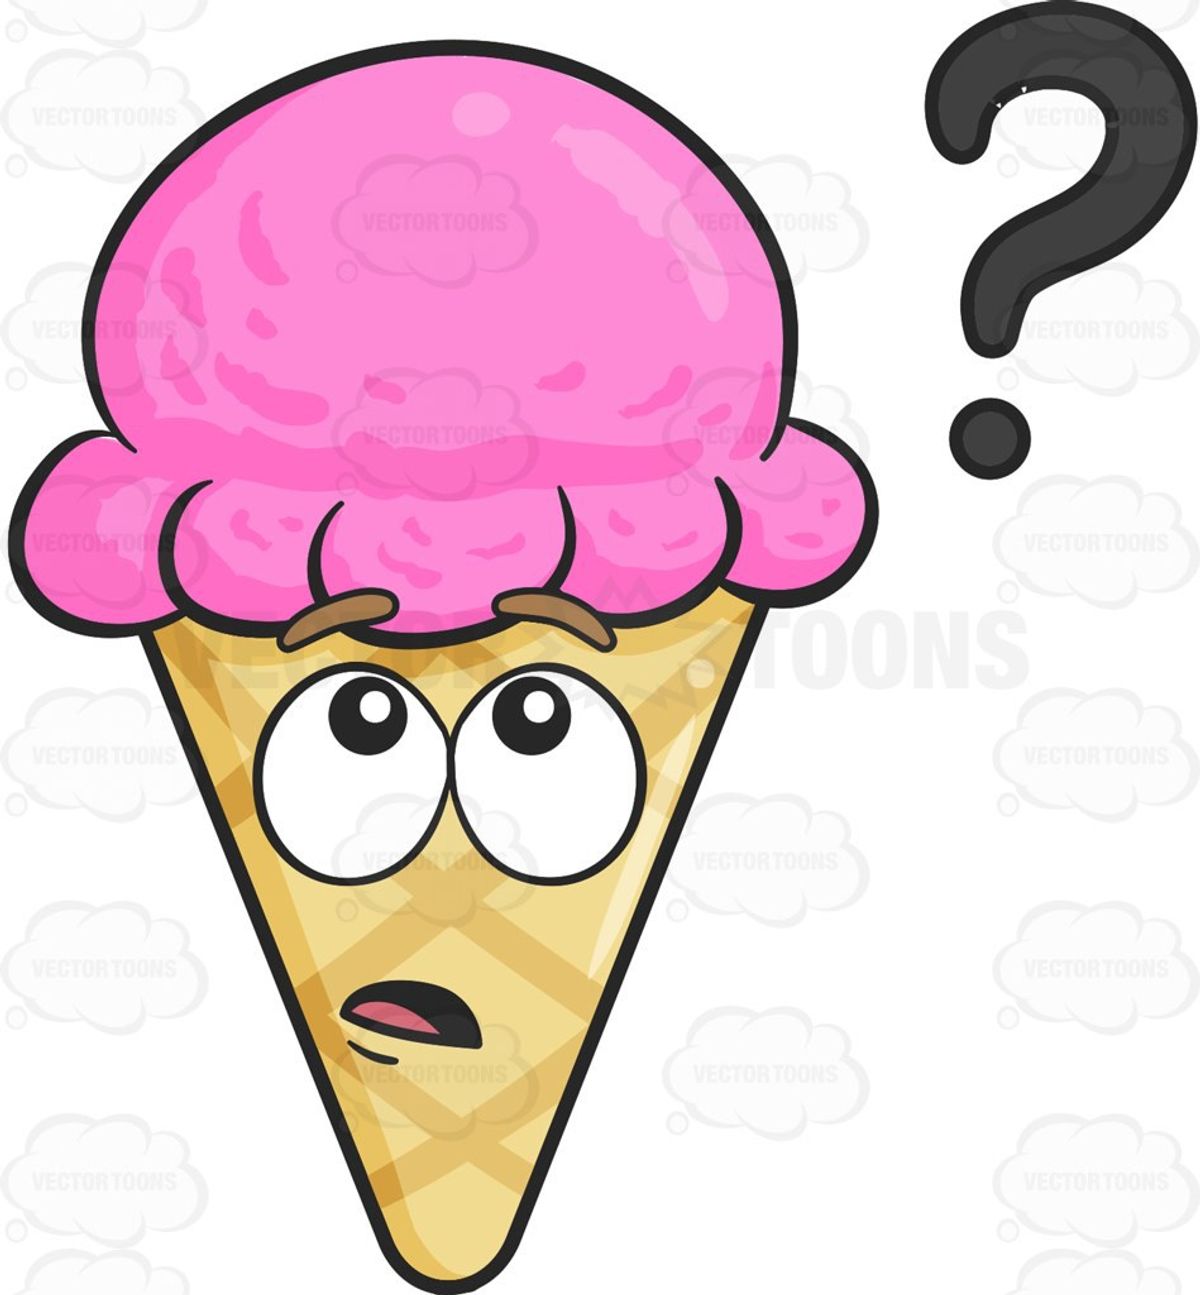 Is Ice Cream A Boy Or A Girl?